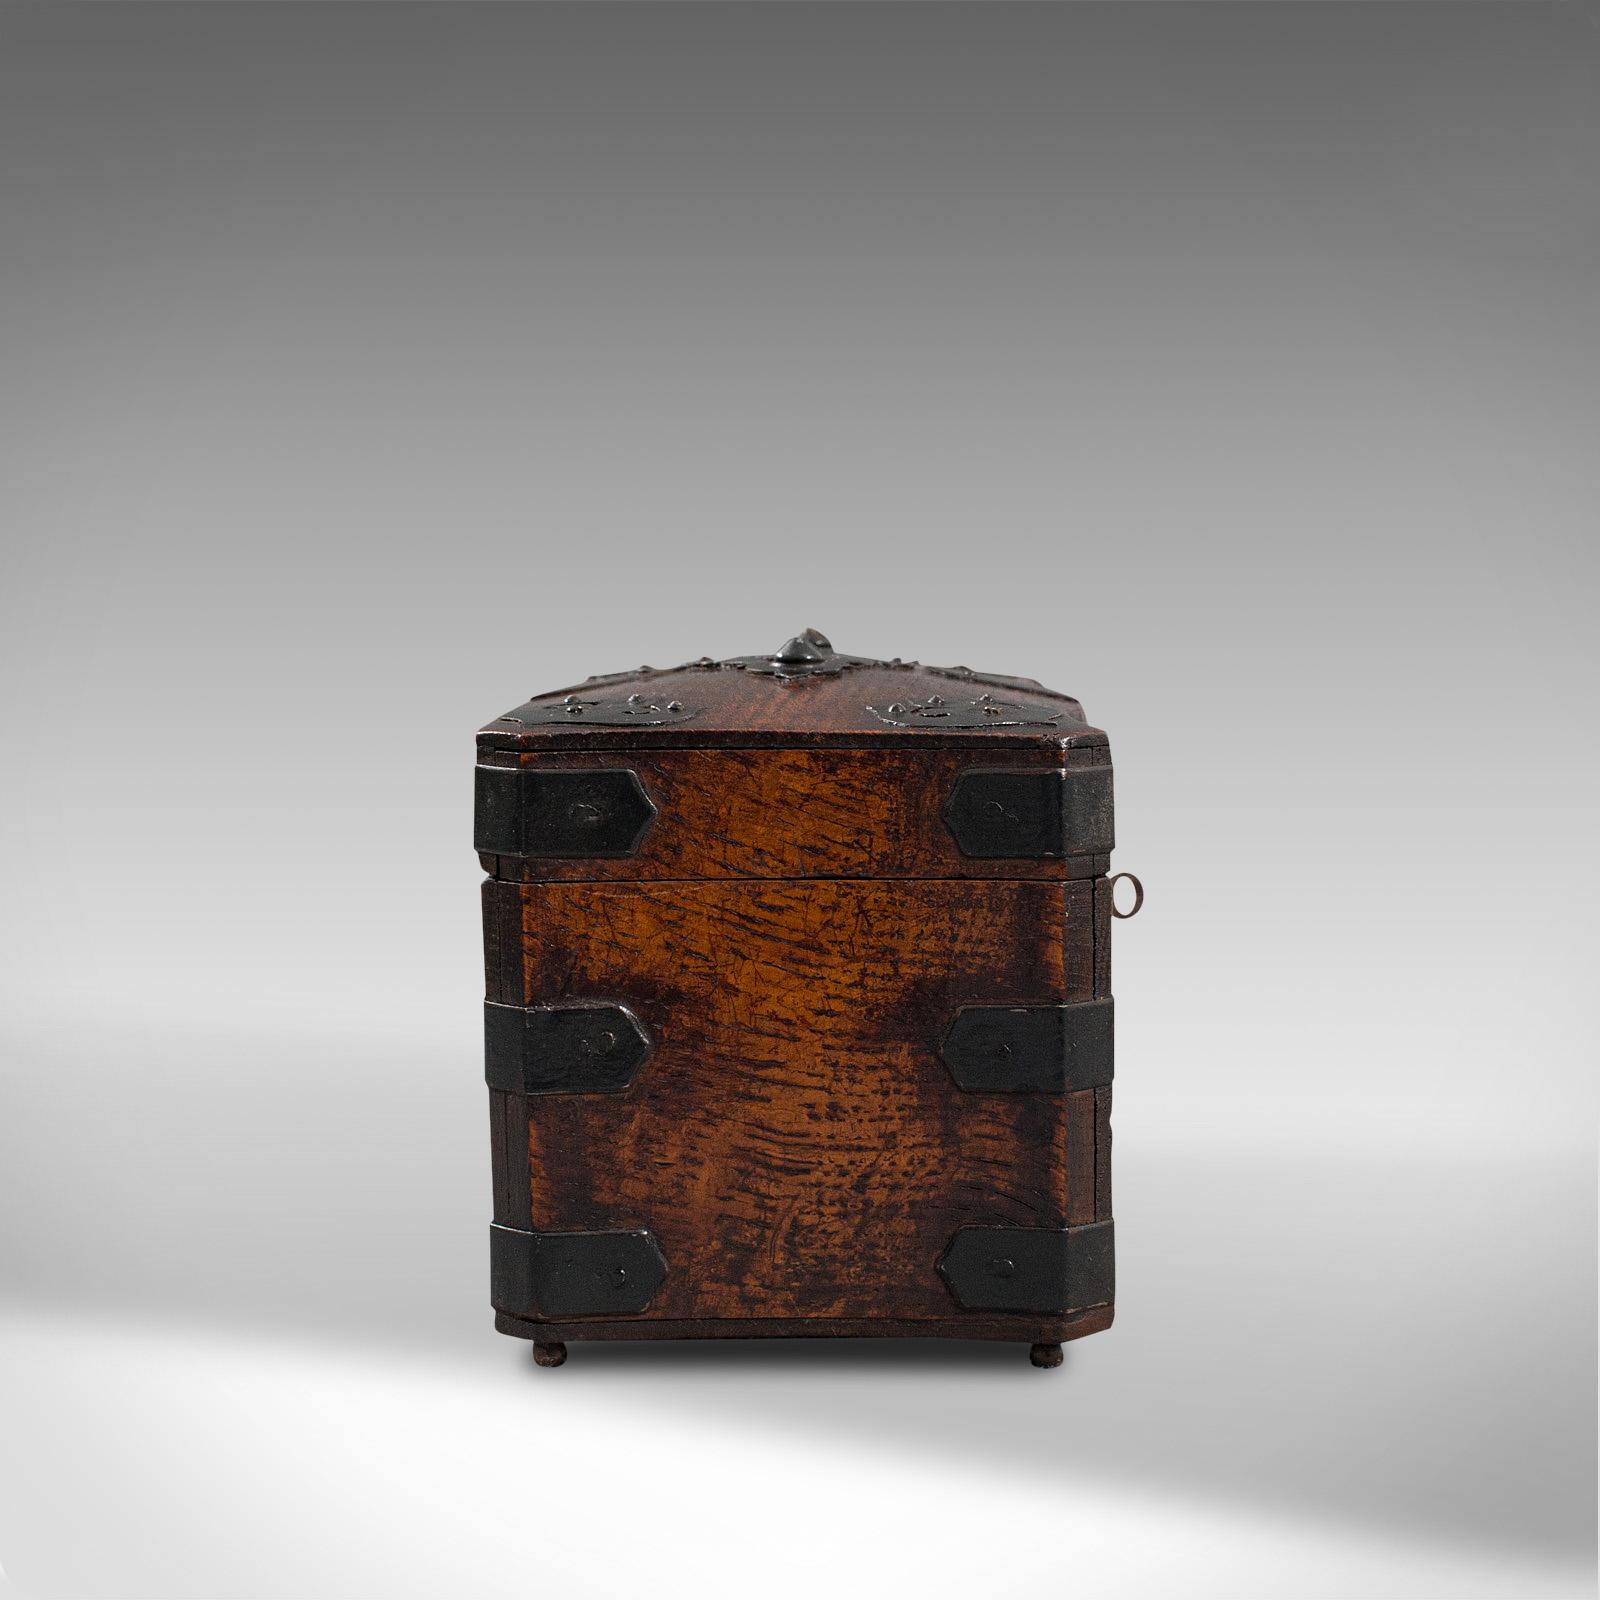 British Antique Tea Box, English, Oak, Iron, Connoisseur Caddy, Case, Georgian